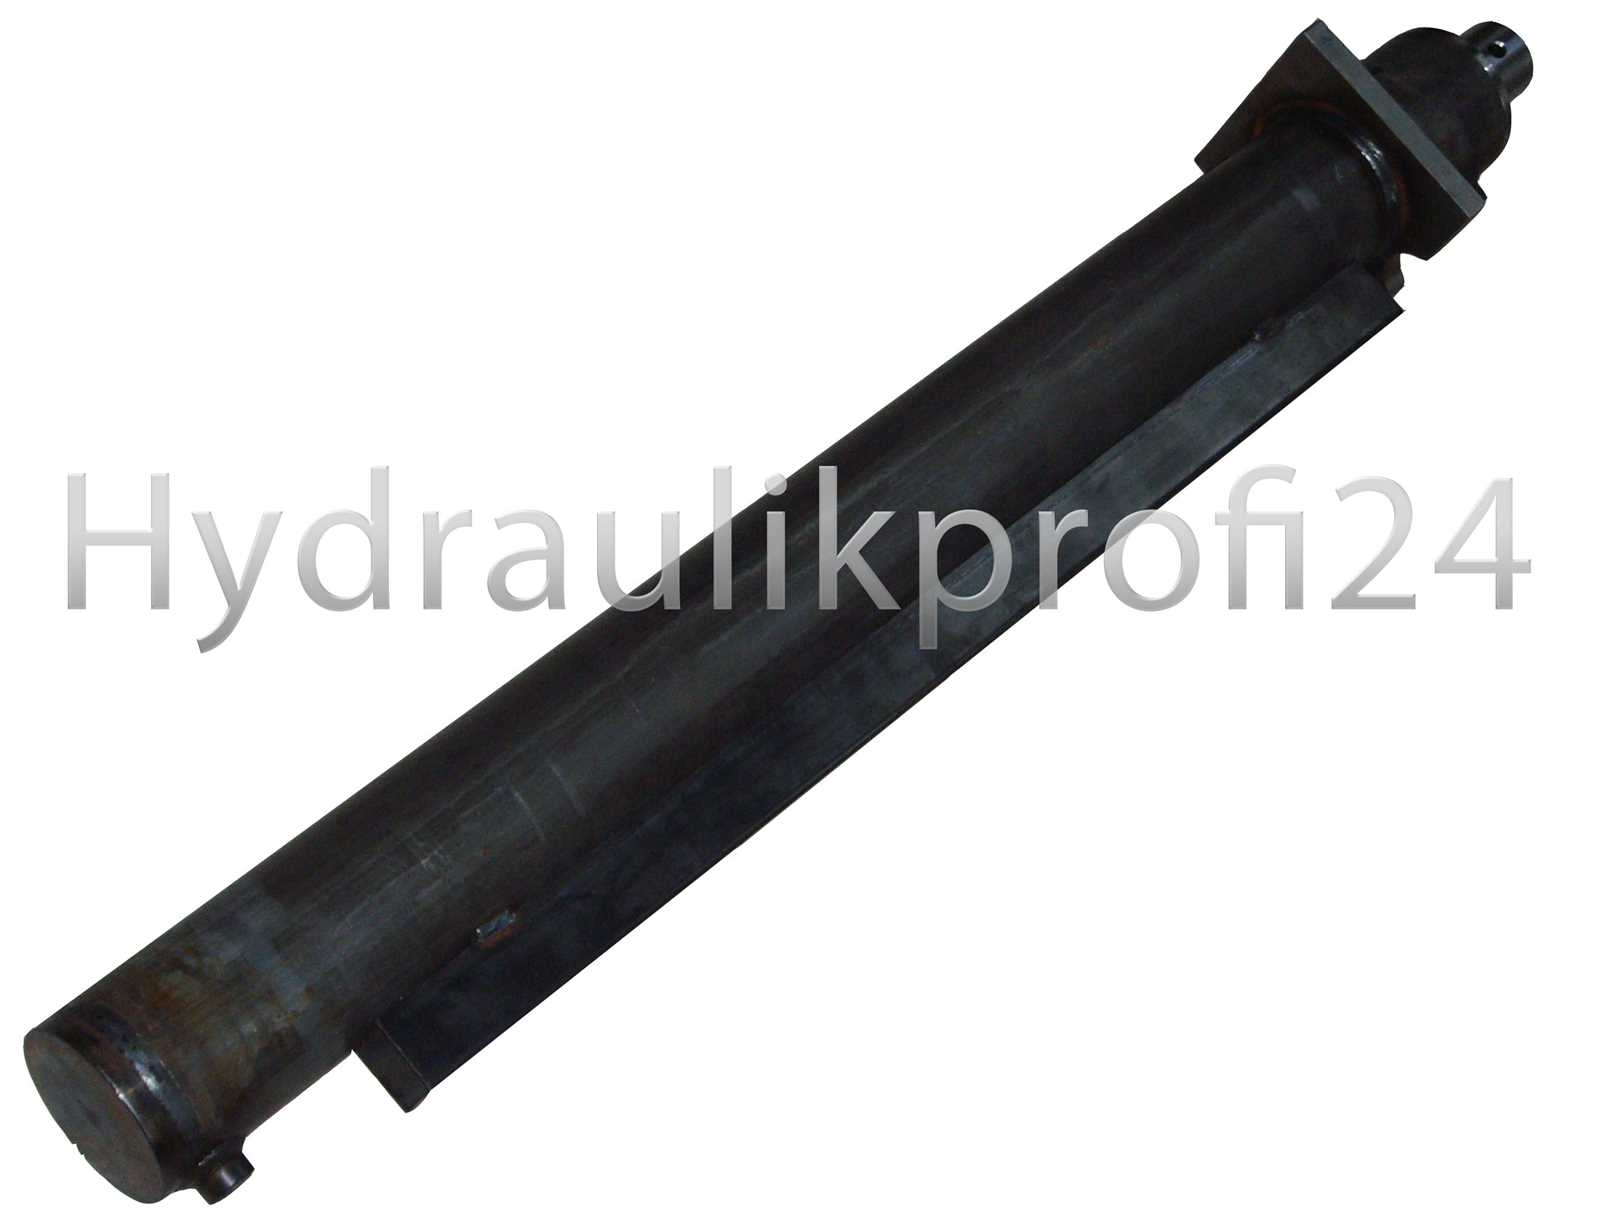 Hydraulikprofi24 - Hydraulikzylinder Holzspalterzylinder 80-120